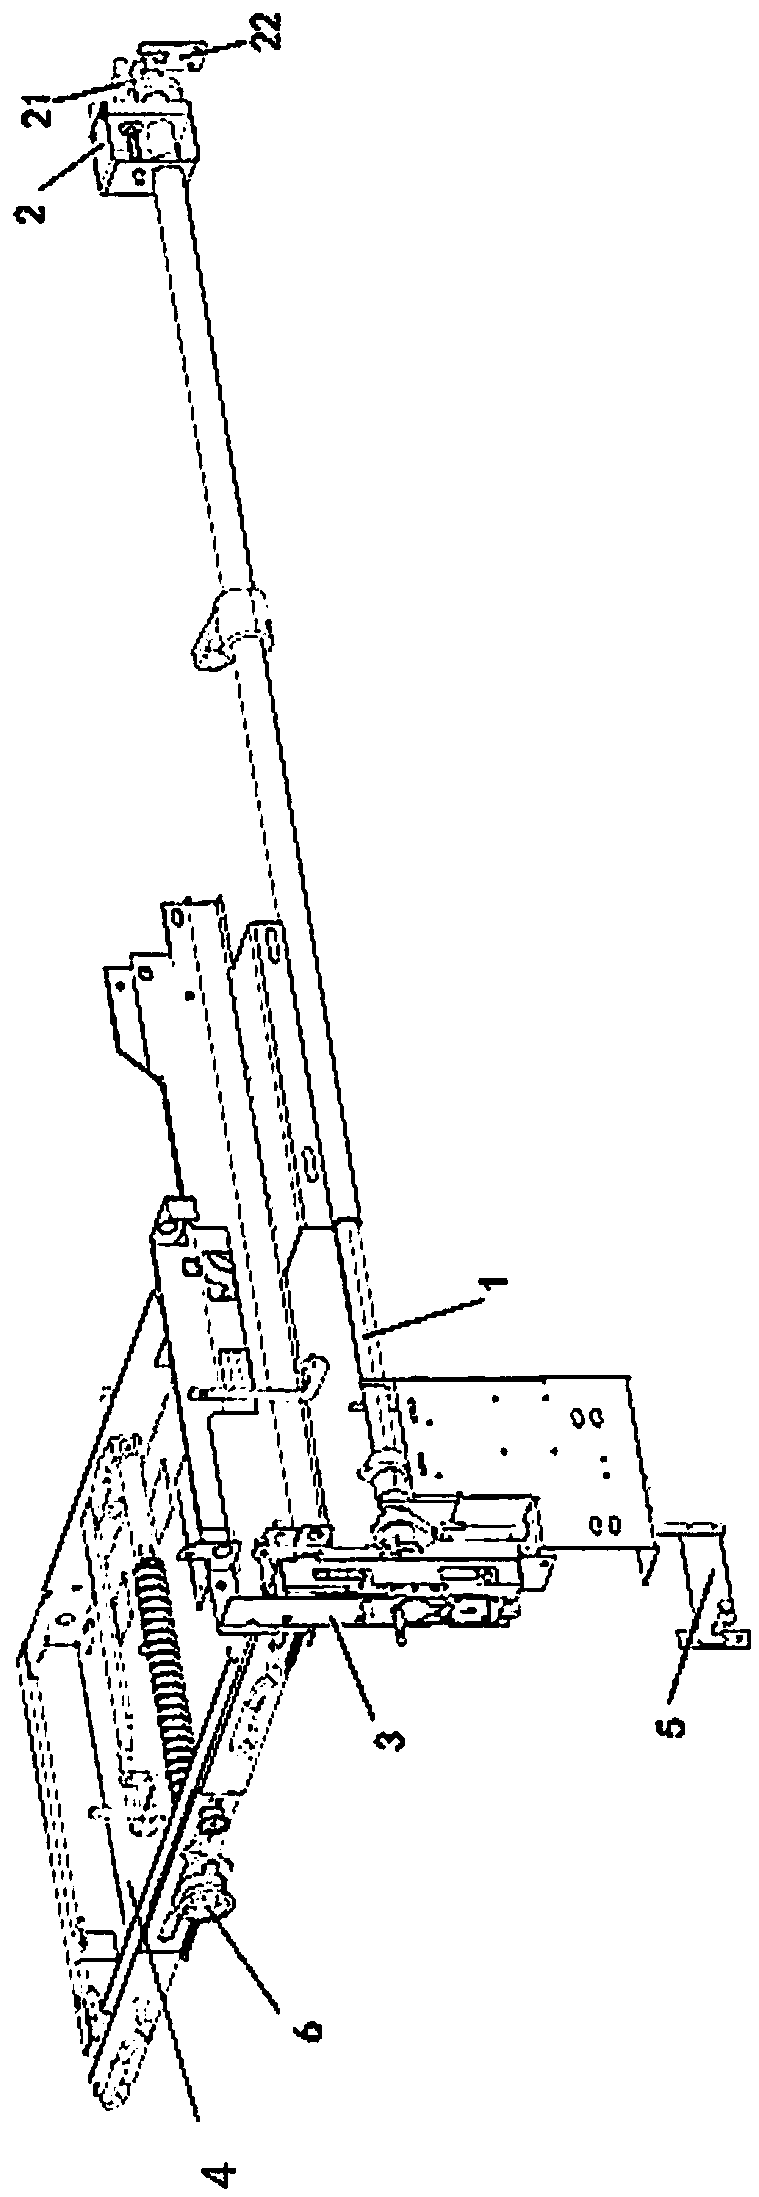 A handcart interlocking mechanism of a five-prevention interlocking device